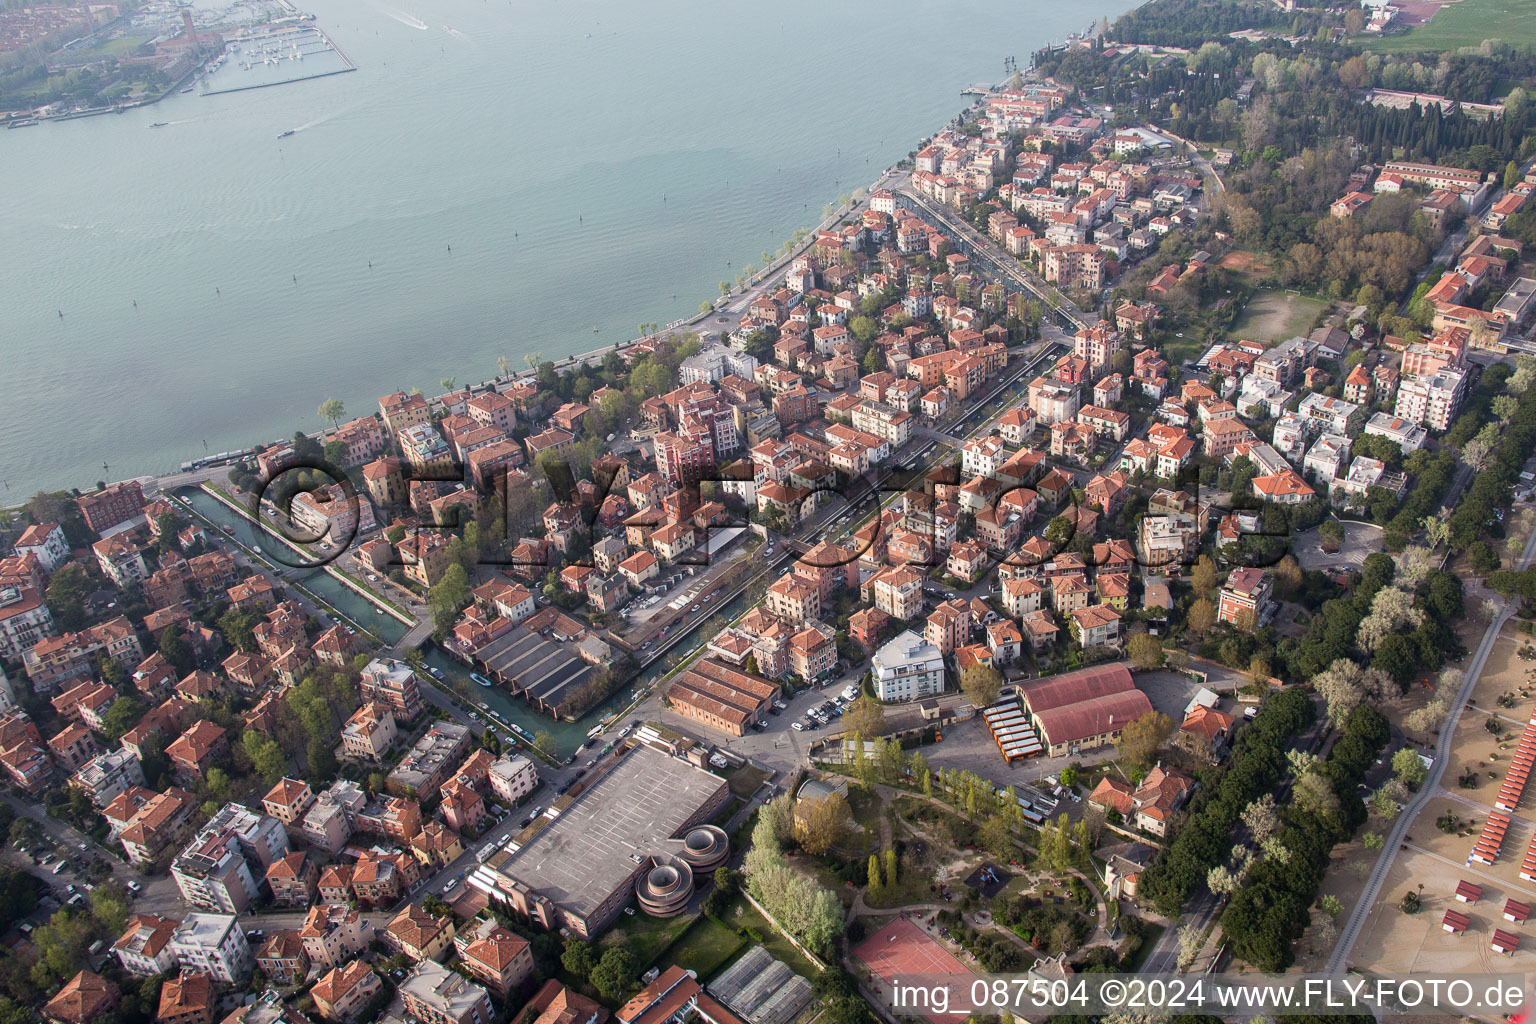 Aerial view of Venezia in the state Veneto, Italy